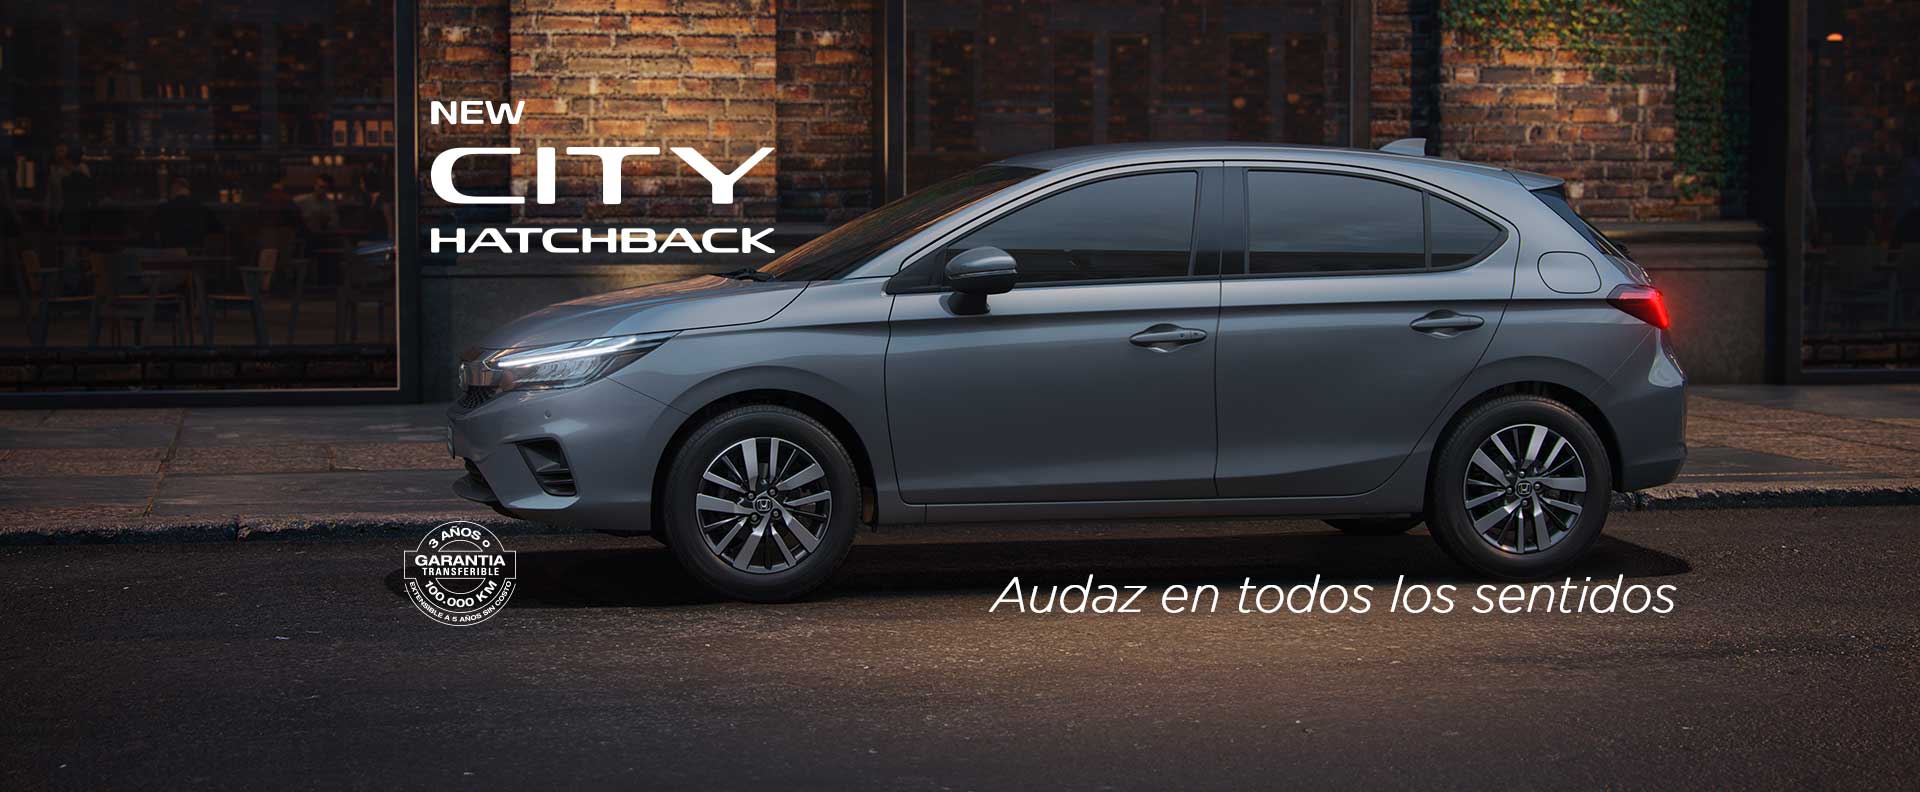 city-hatchback-superior.jpg